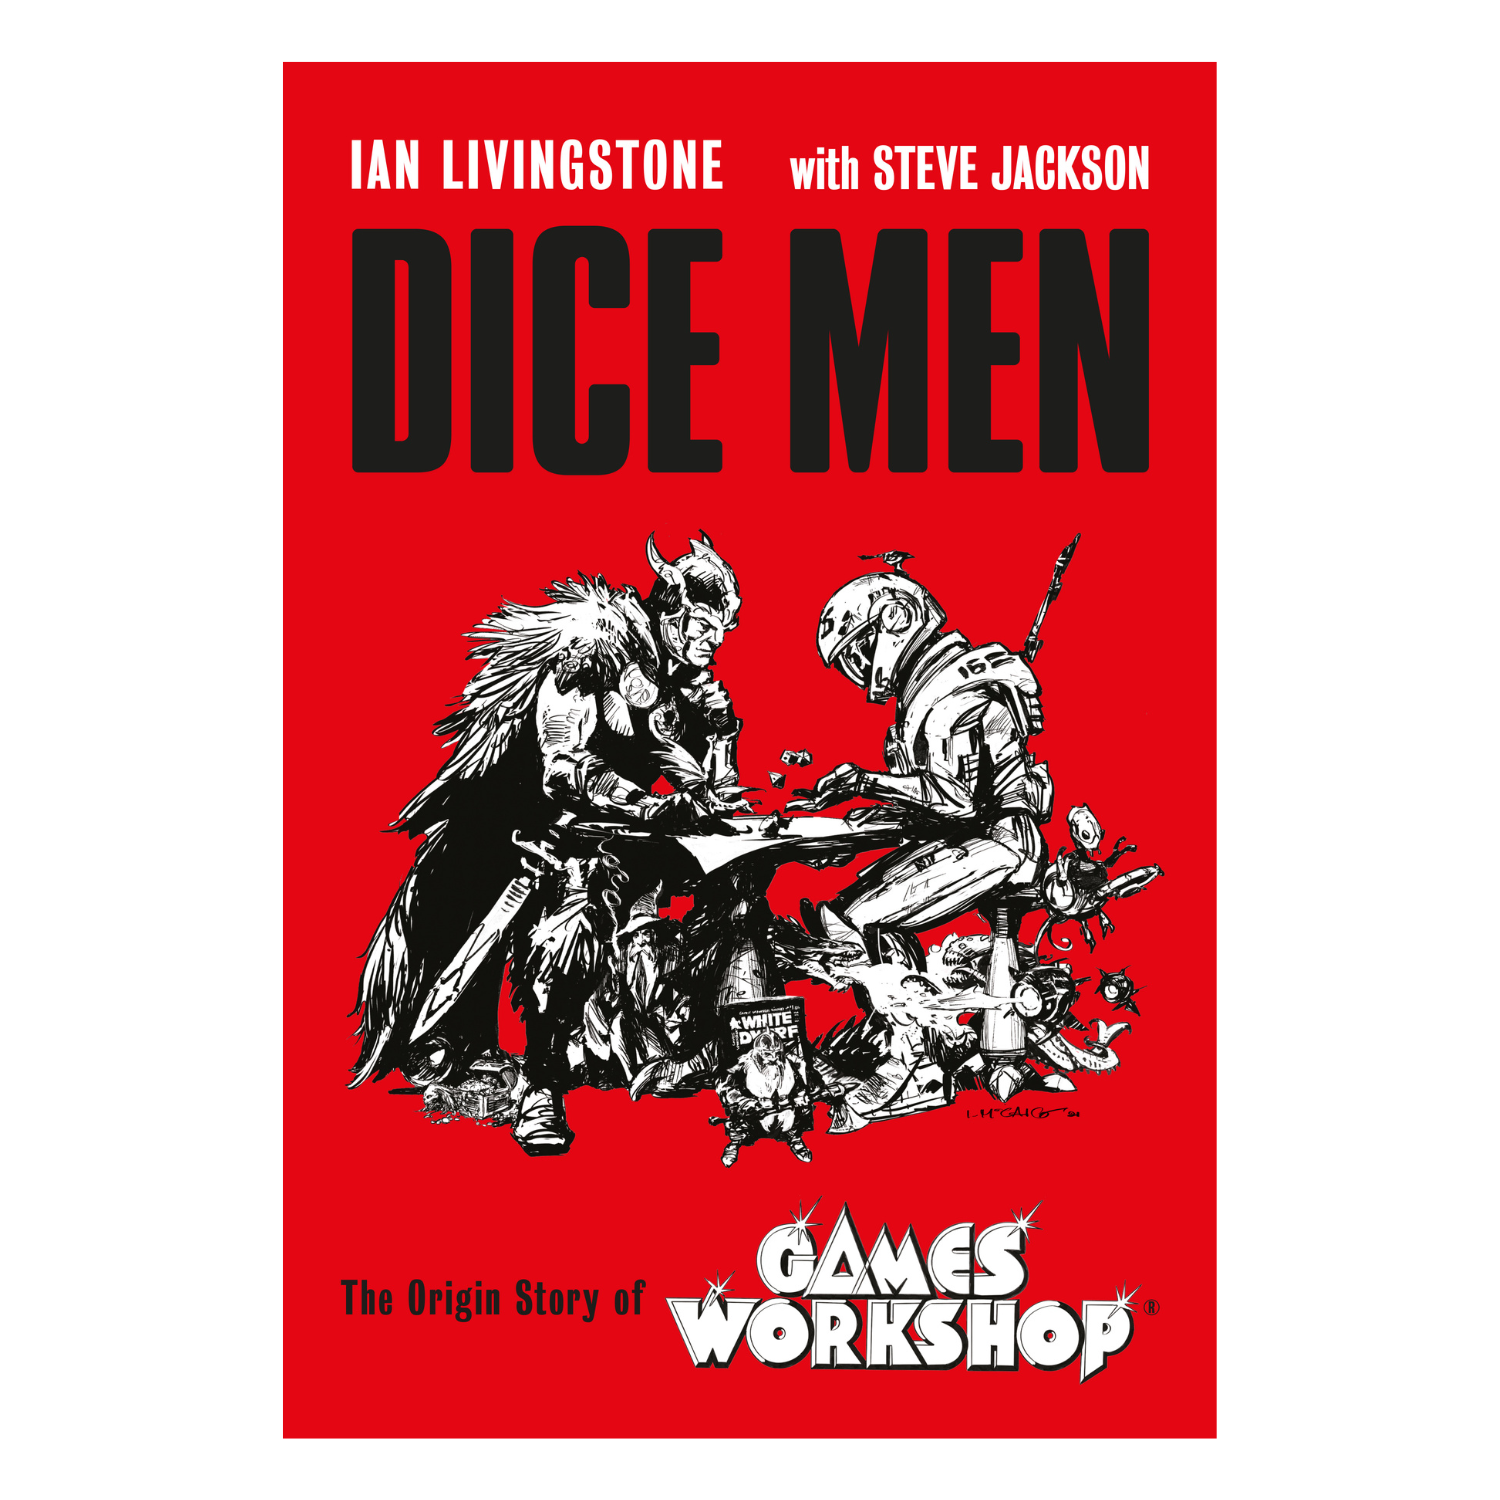 Dice Men: The Origin Story of Games Workshop by Ian Livingstone